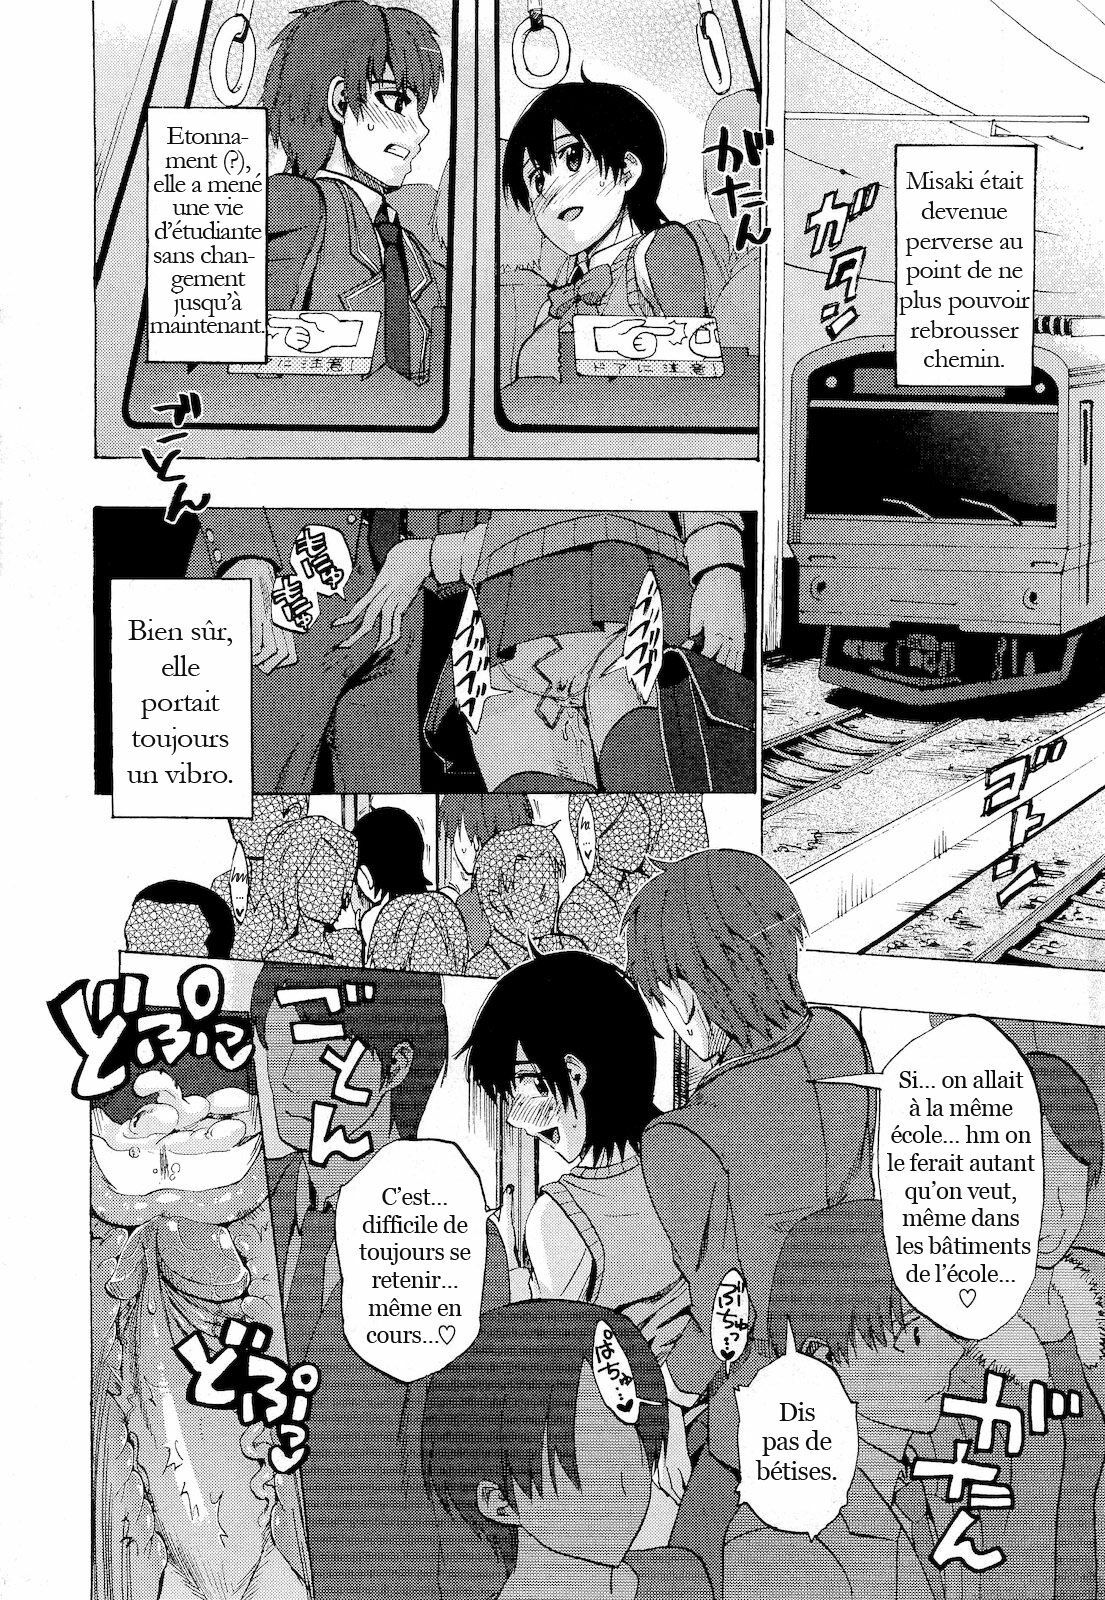 [Takenoko Seijin] L'histoire d'après [trad.agidyne] [FR] V2 page 10 full